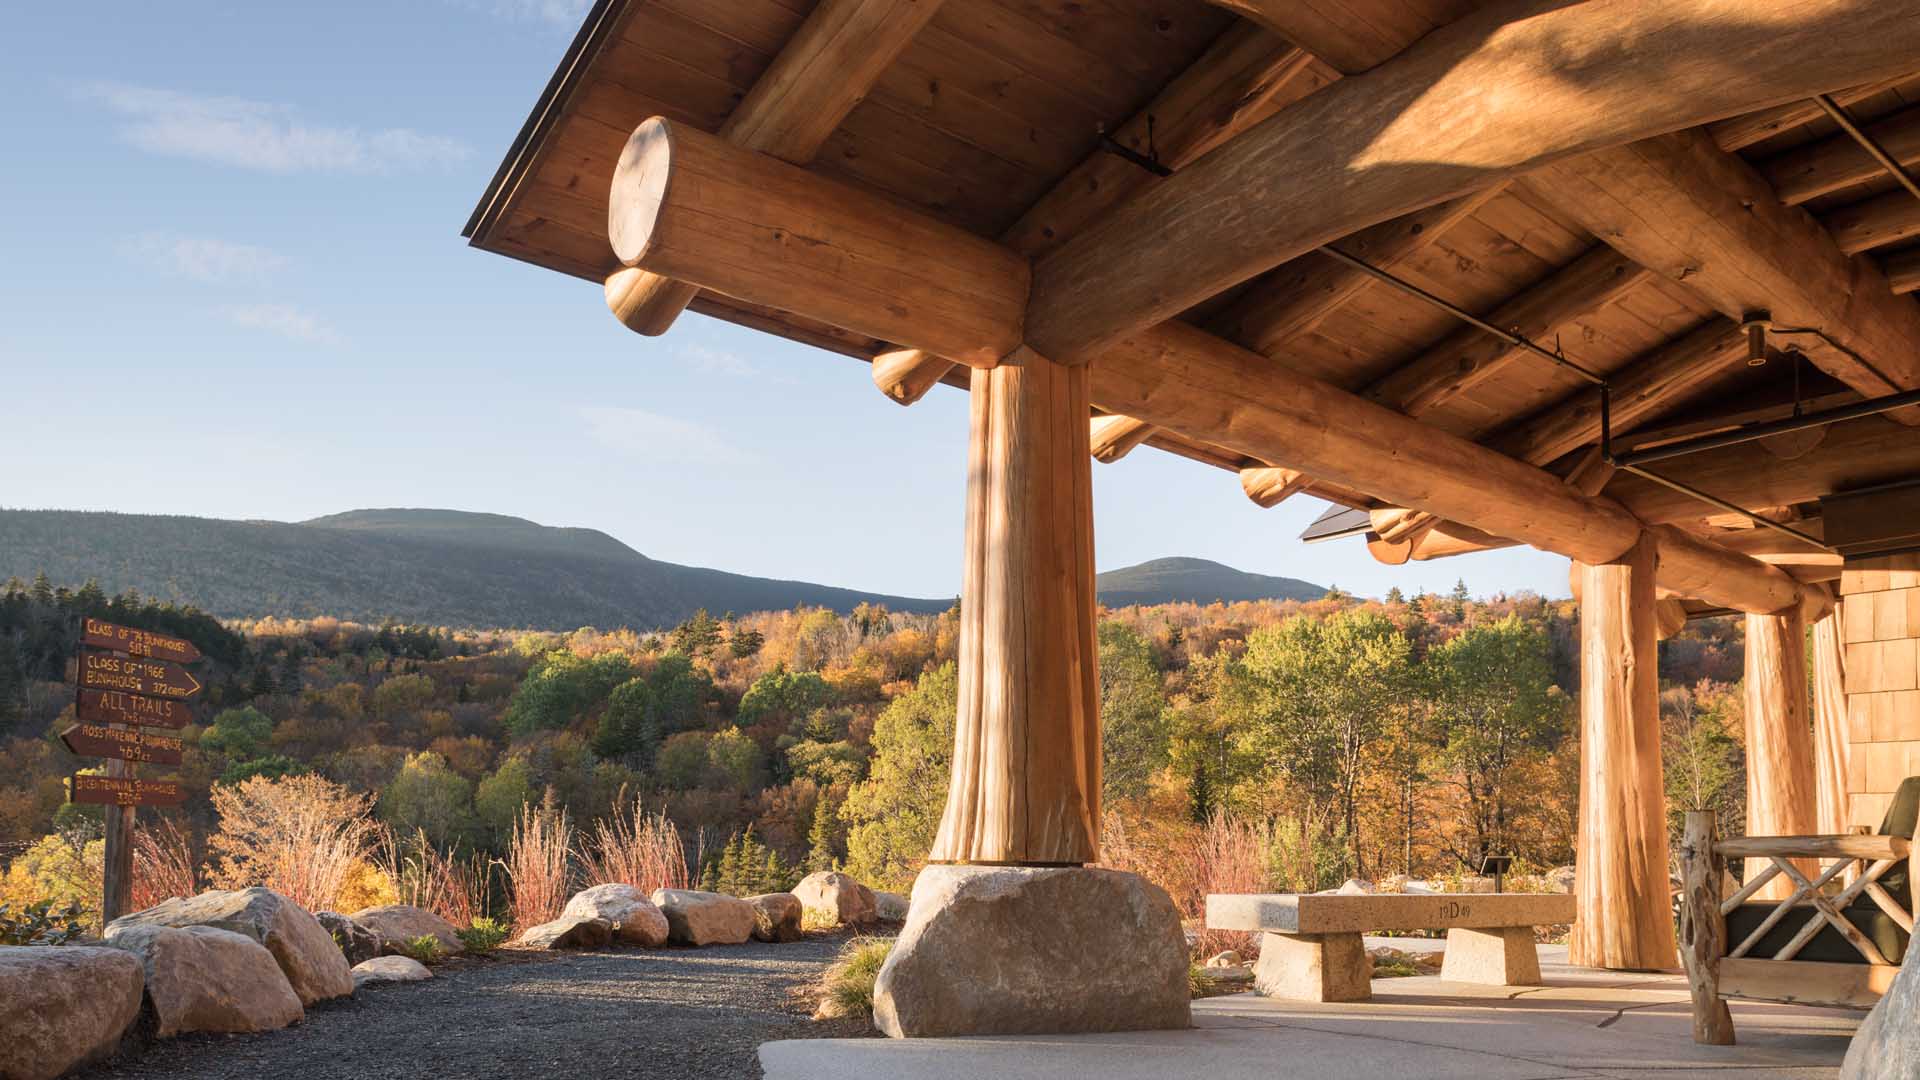 Architecture and design of Moosilauke Ravine Lodge - Warren, New Hampshire